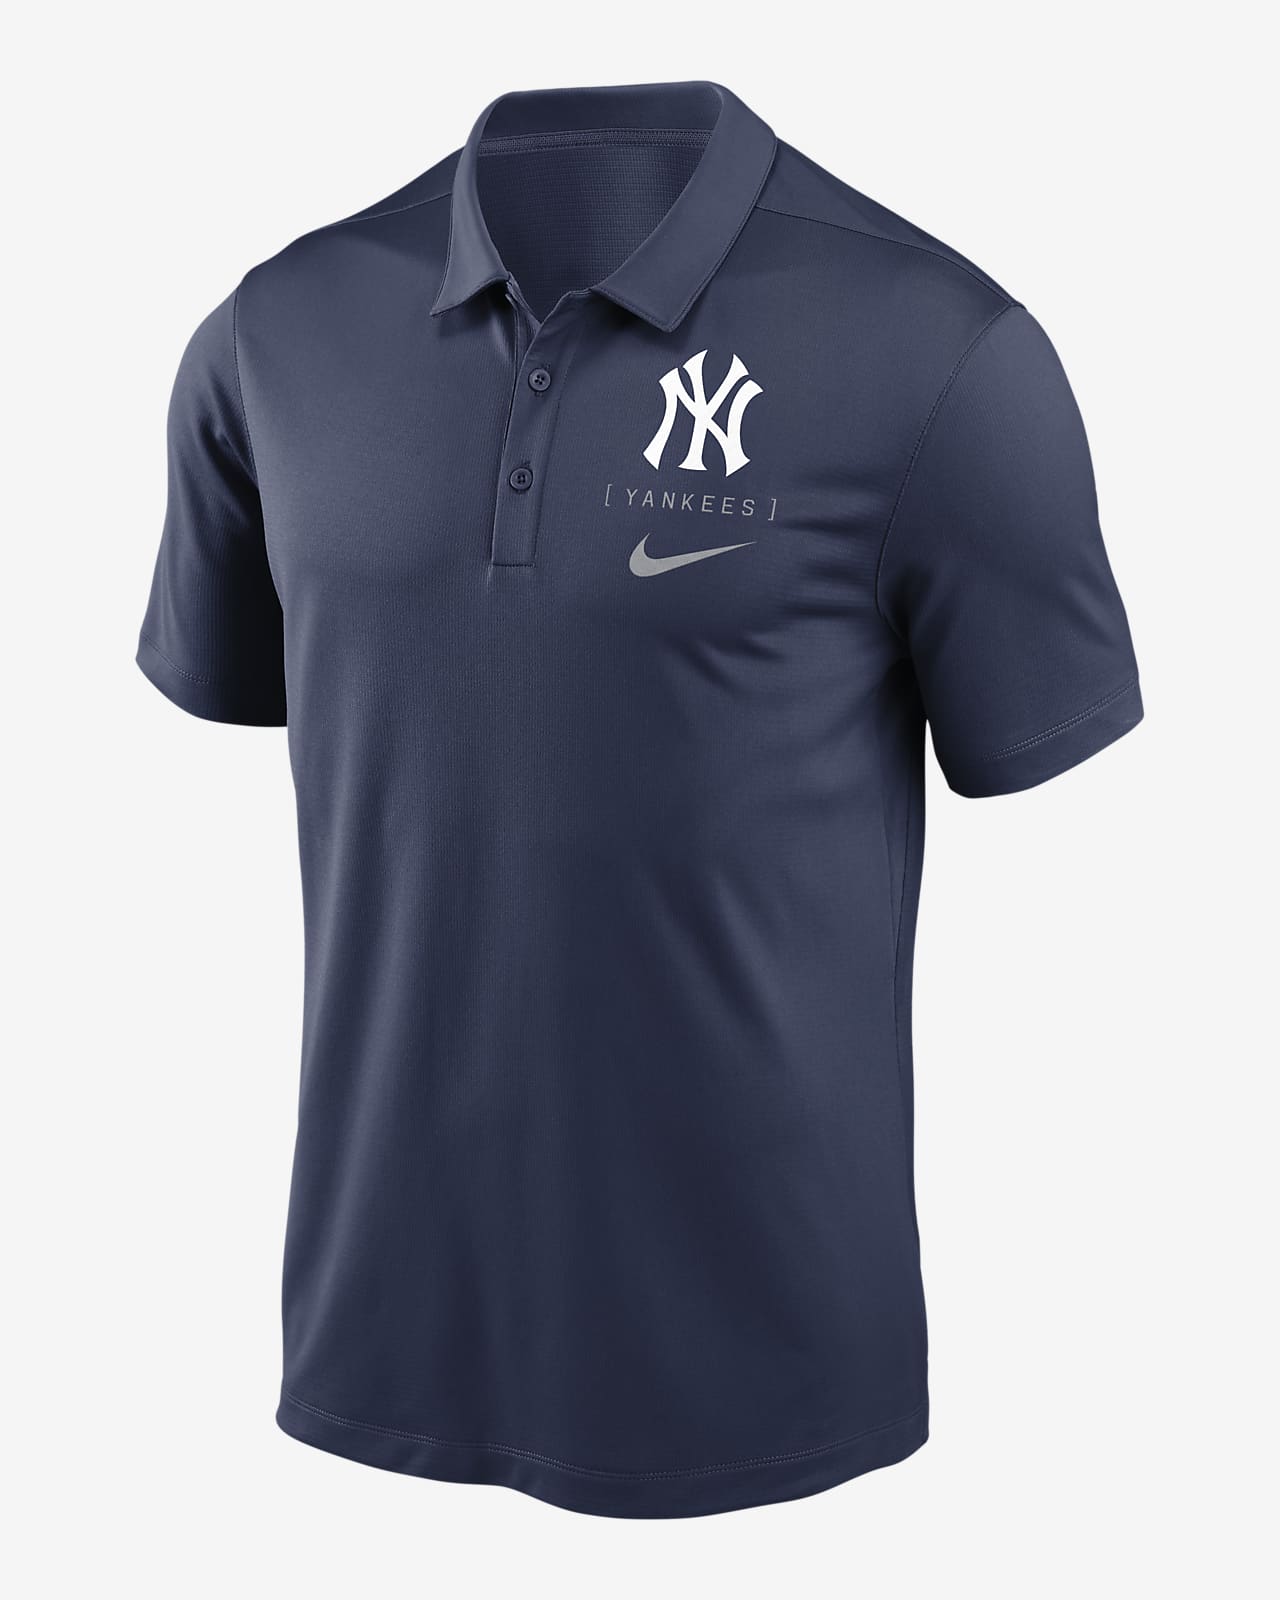 New York Yankees Franchise Logo Men's Nike Dri-FIT MLB Polo